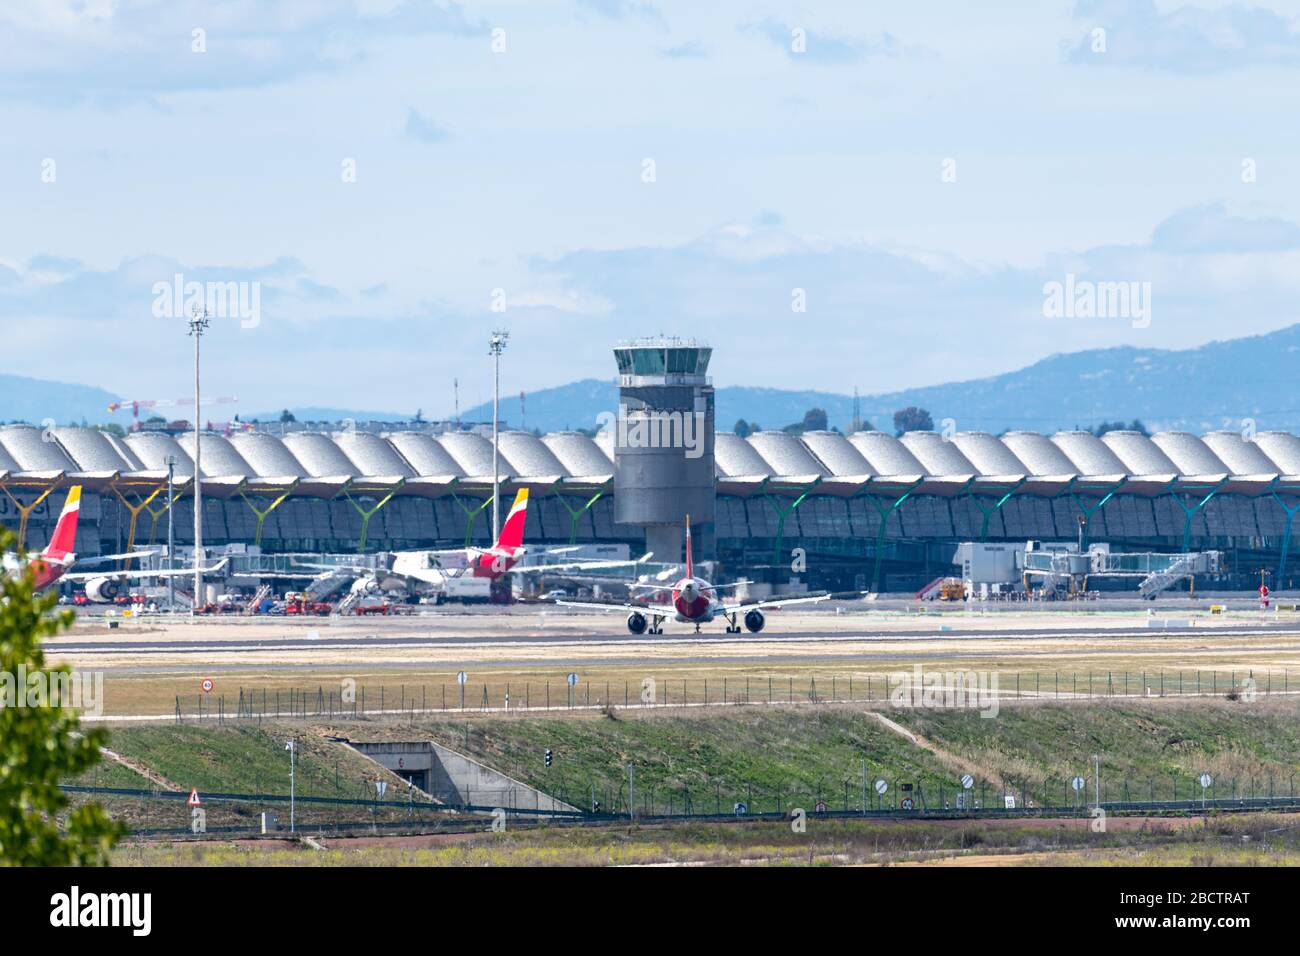 MADRID, SPAIN - APRIL 14, 2019: Iberia Airlines Airbus A320 passenger plane landing at Madrid-Barajas International Airport Adolfo Suarez. Stock Photo